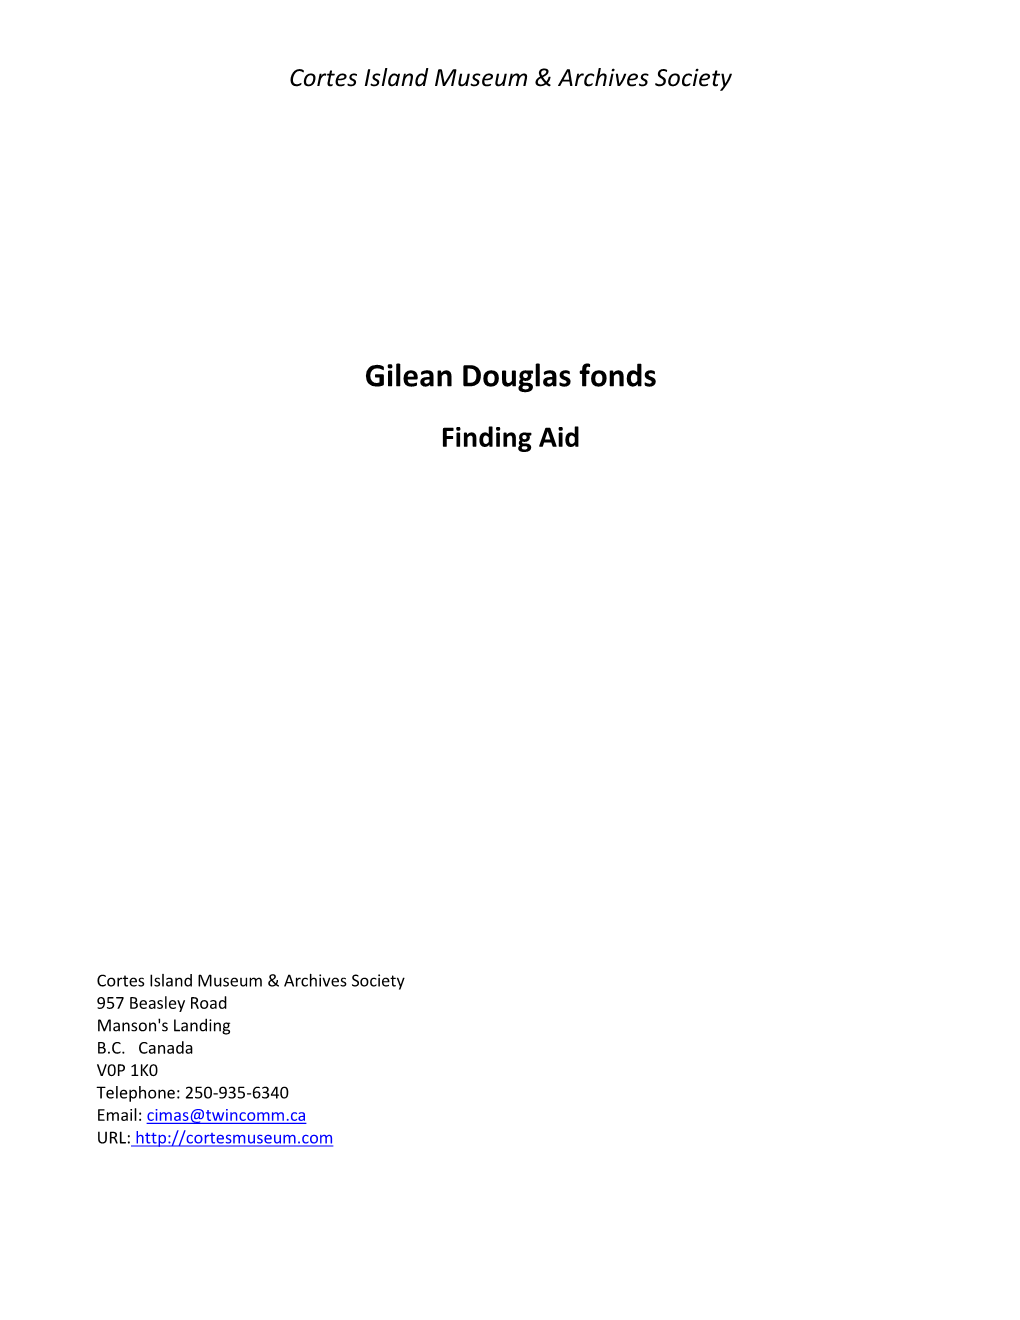 Gilean Douglas Fonds Finding Aid